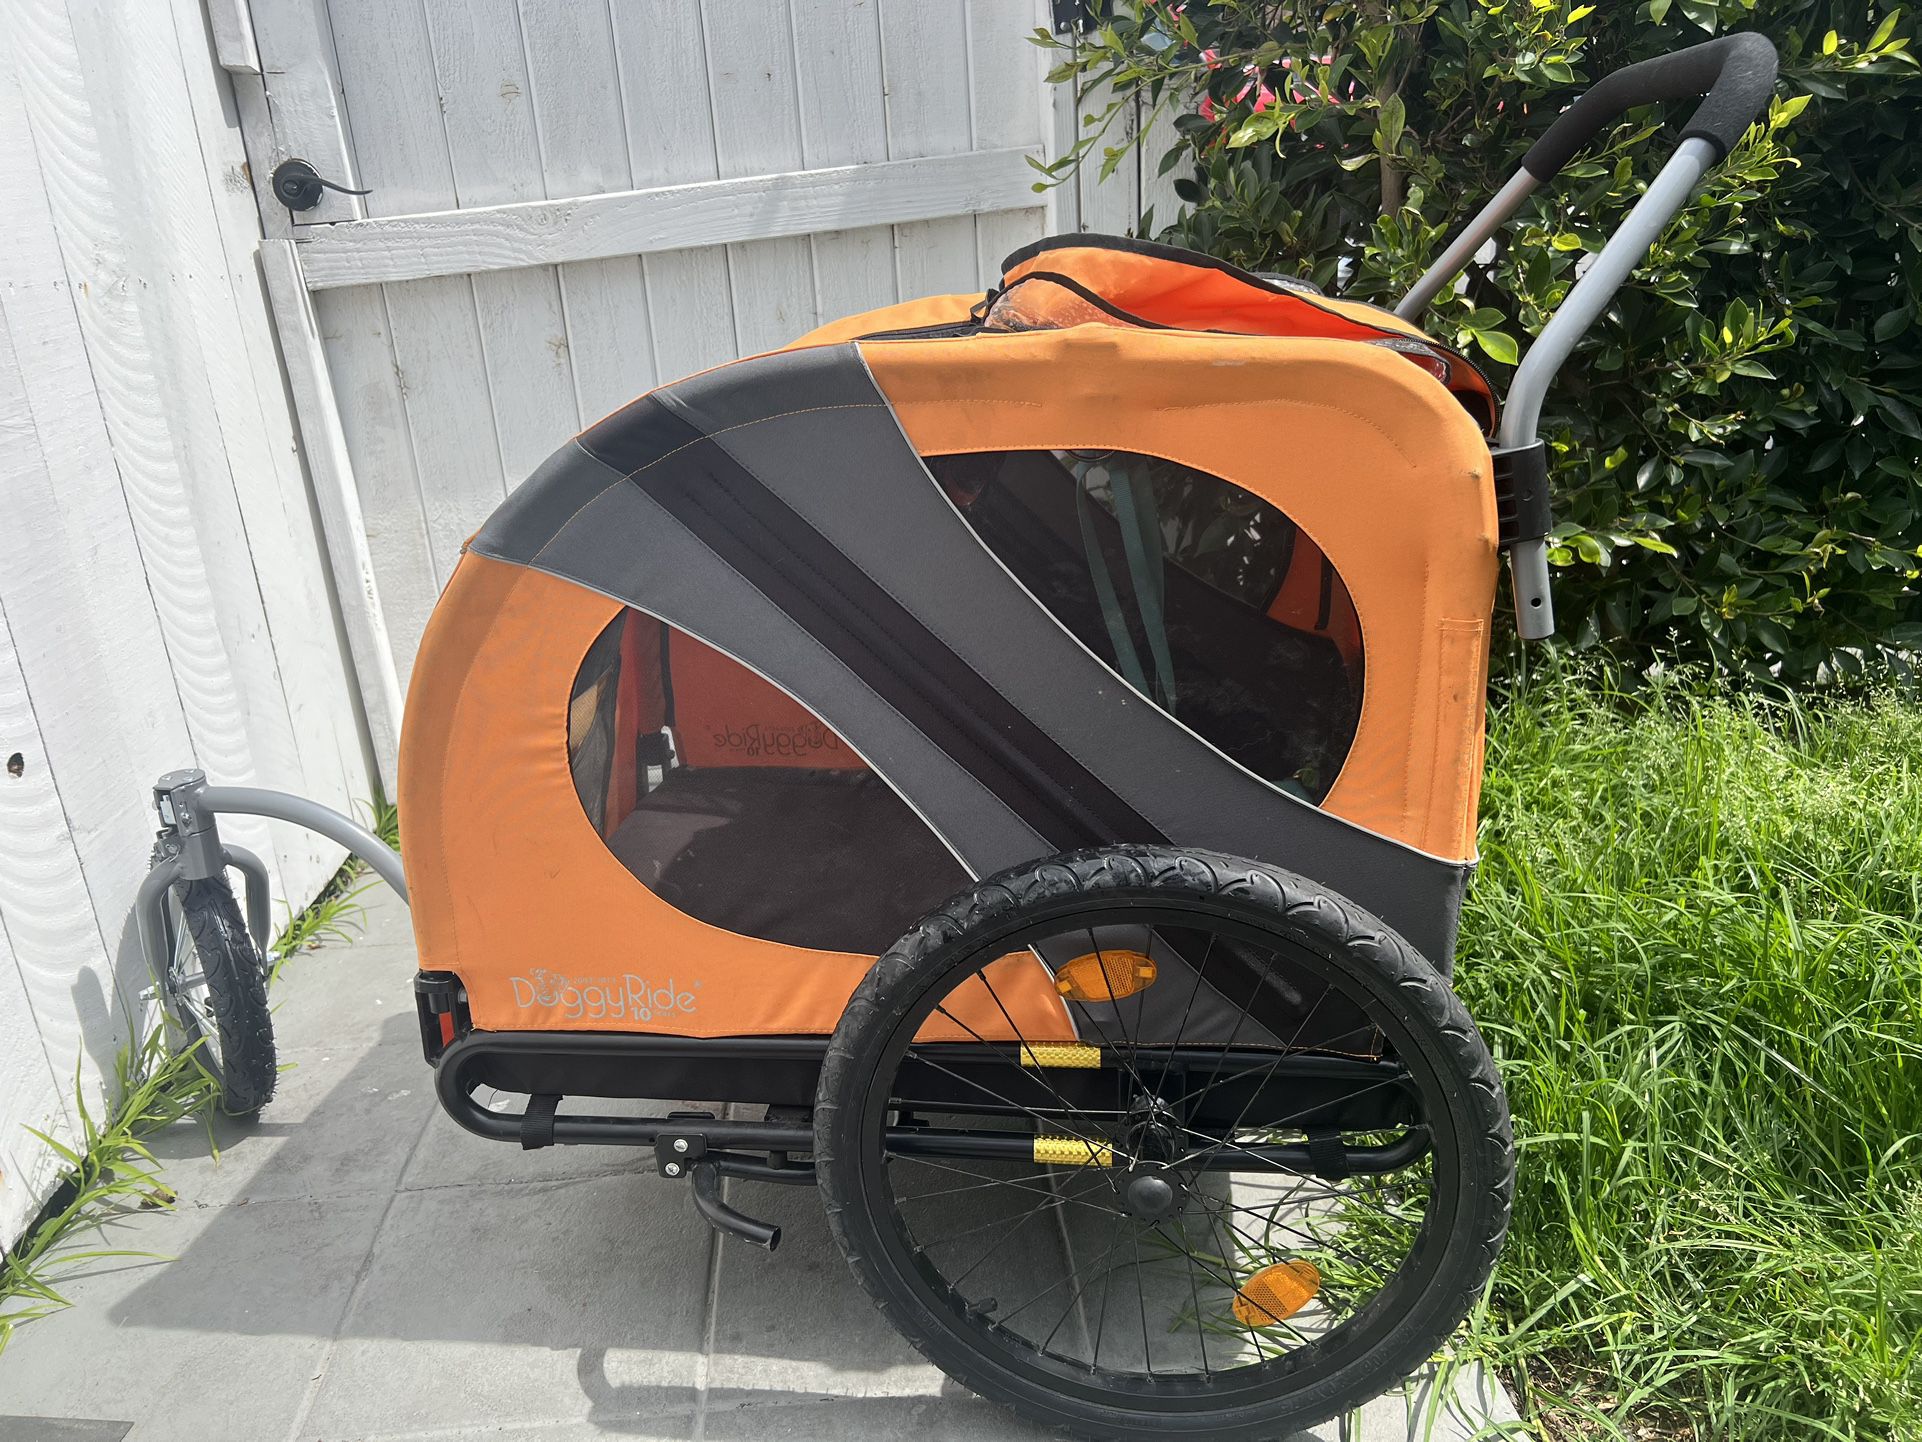 Dutch dog Novel10 Bike Trailer And Stroller With Rain Cover And Cargo Rack